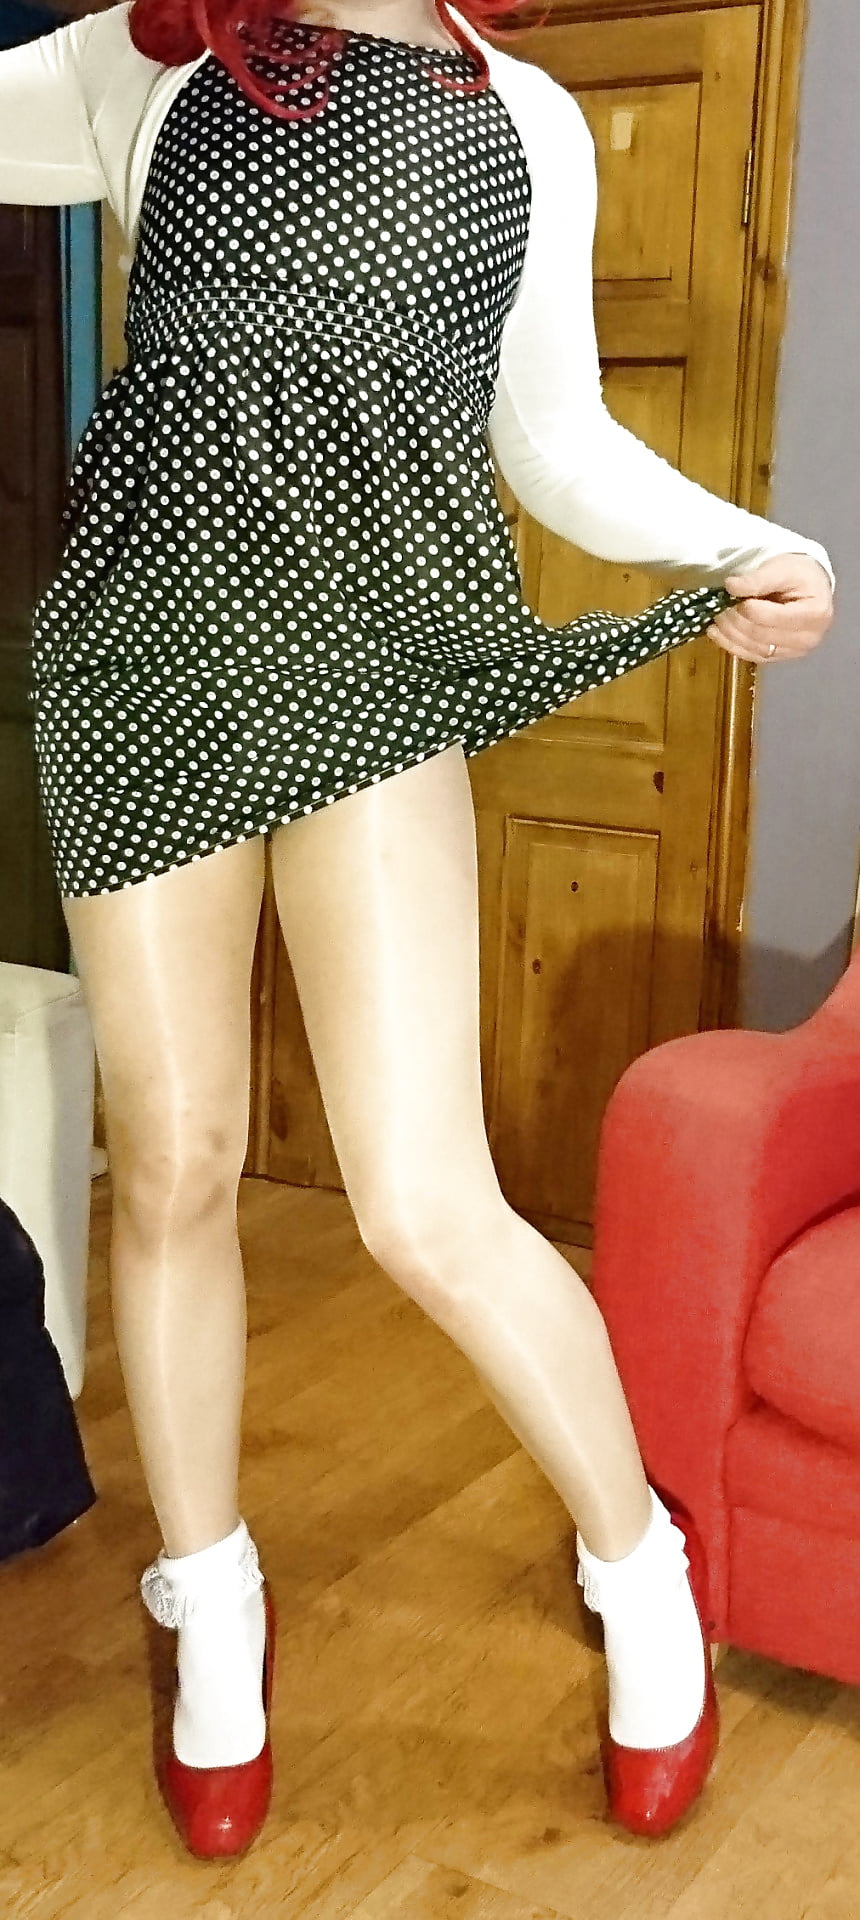 Marie crossdresser in polka-dots and frilly socks  